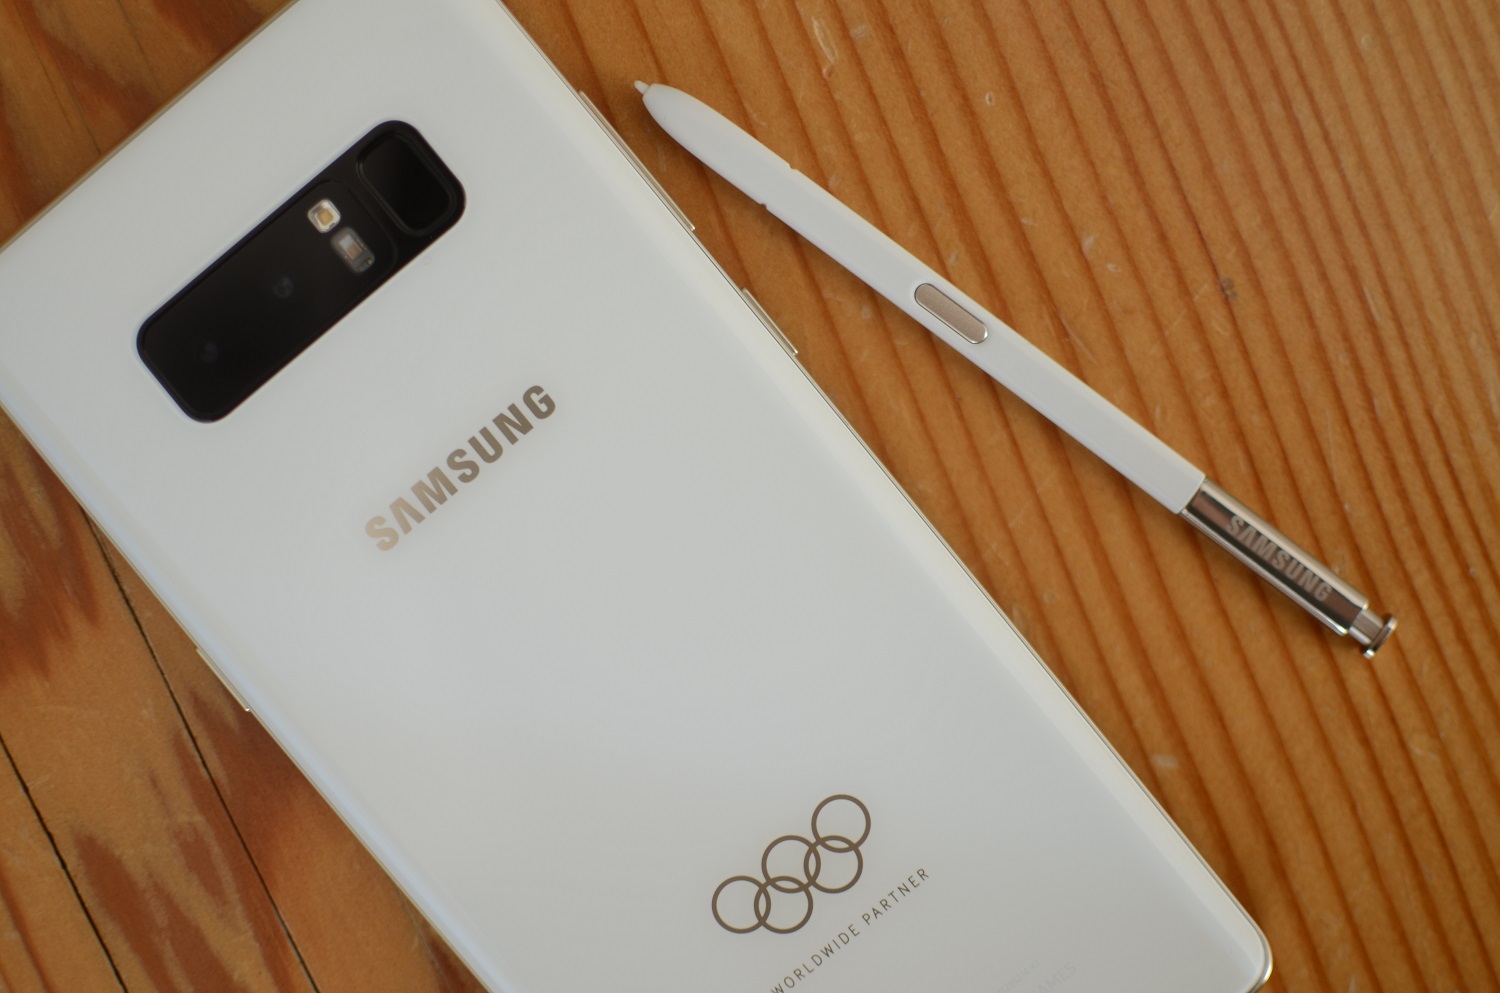 Samsung Galaxy Note 8 Olympic Edition